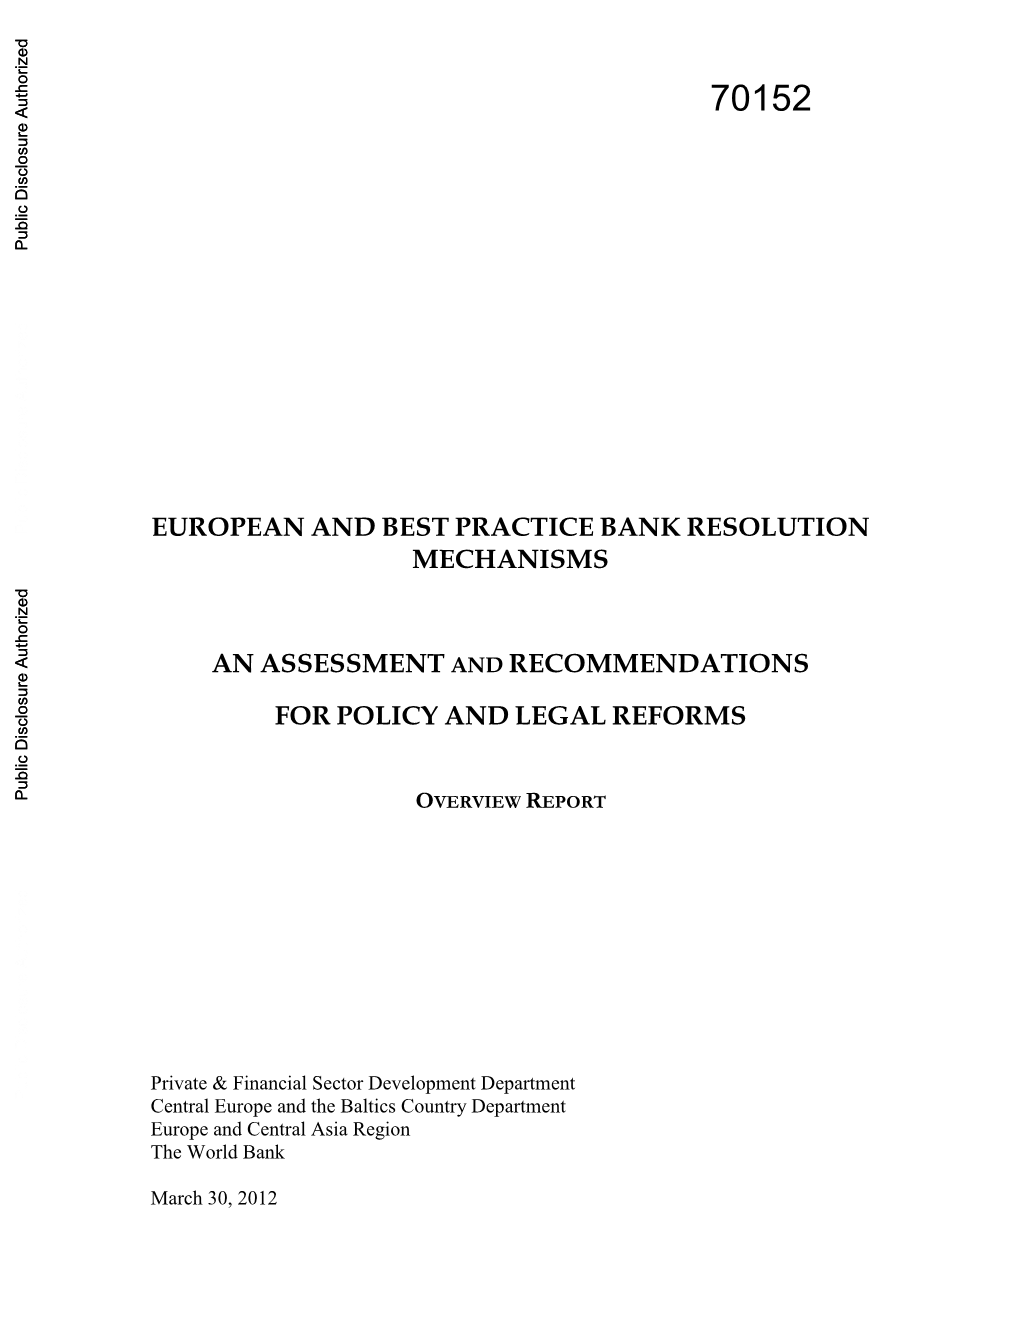 European and Best Practice Bank Resolution Mechanisms